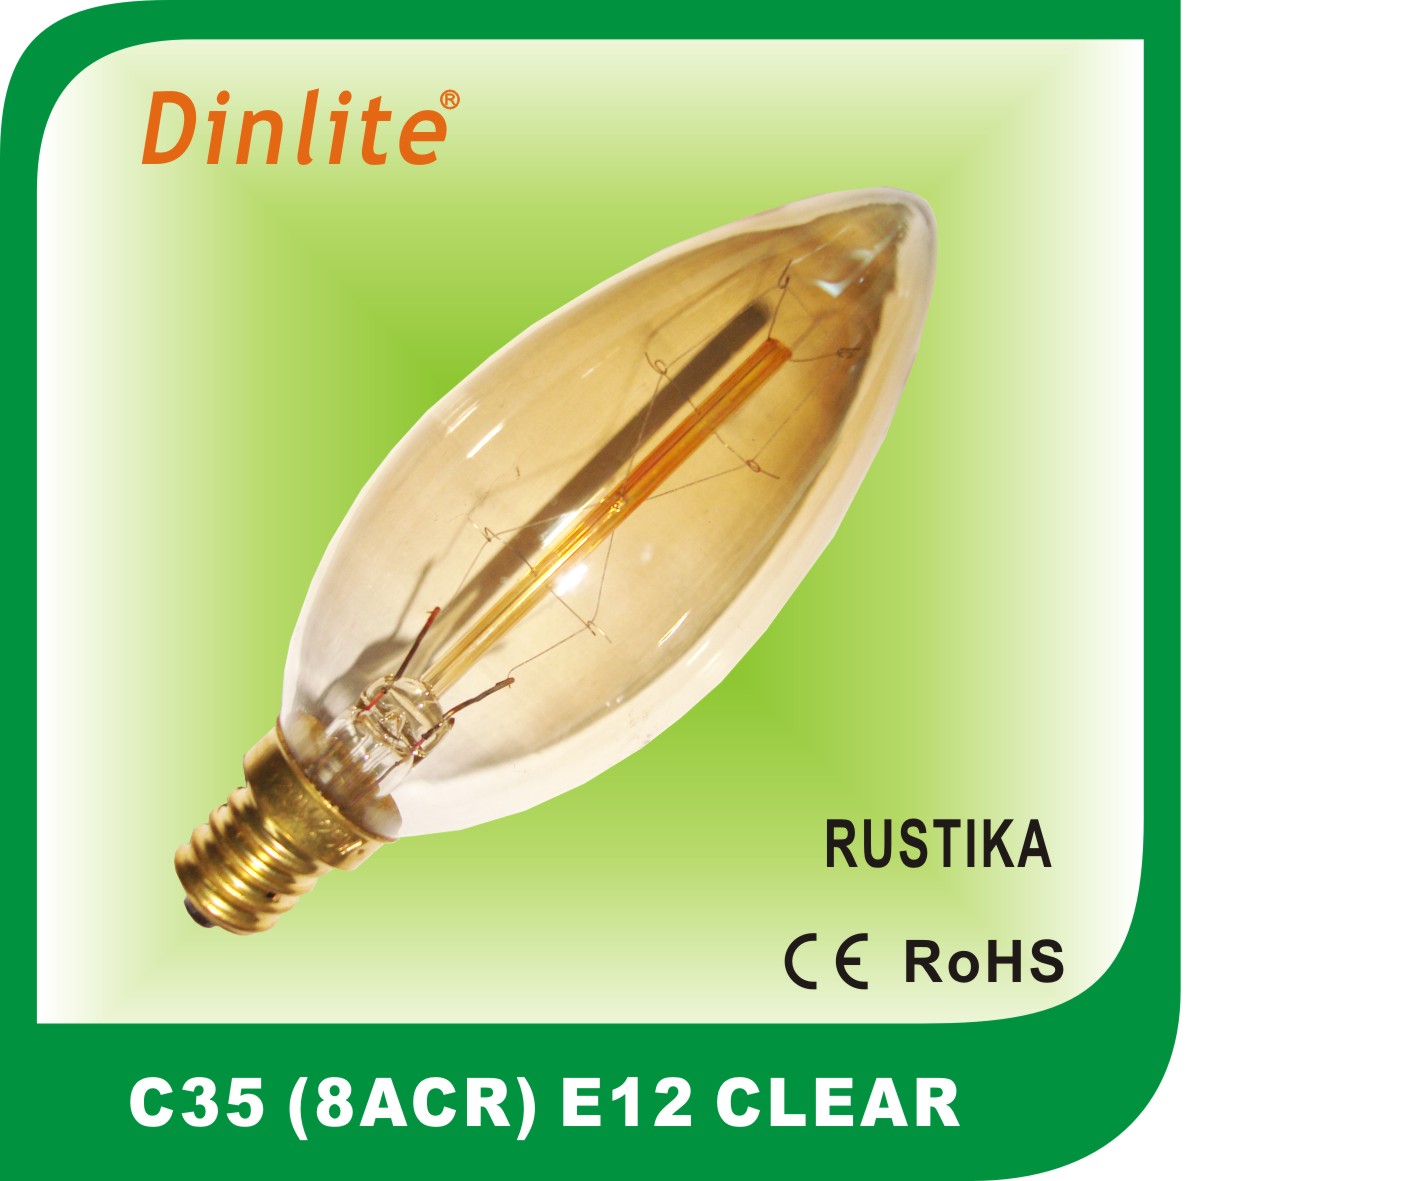 C35 Vintage Bulb Rustica Lamp Decorative Lightings Manufacturers